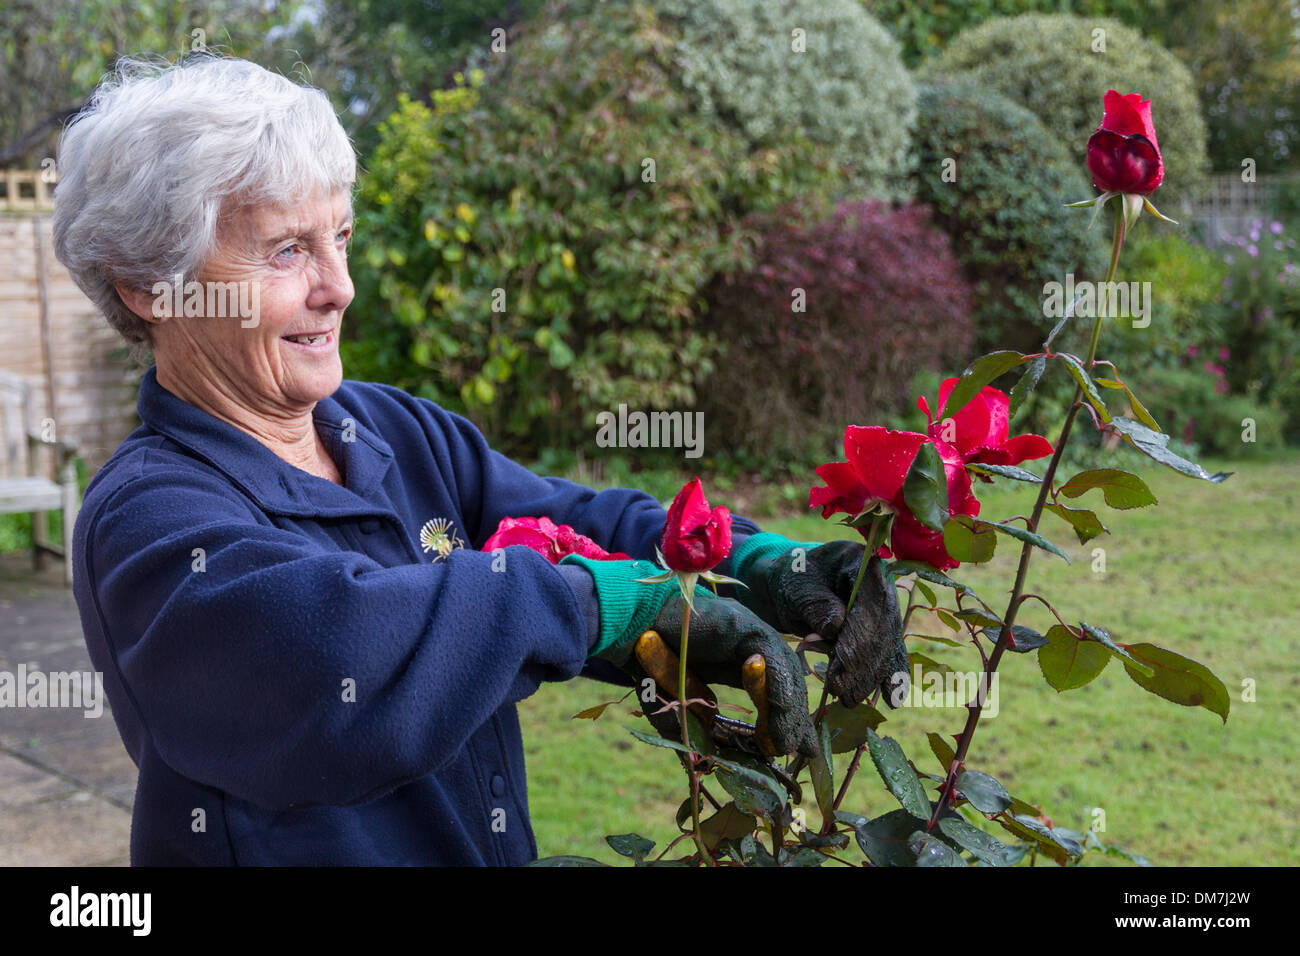 Senior citizen pruning rose bush Stock Photo